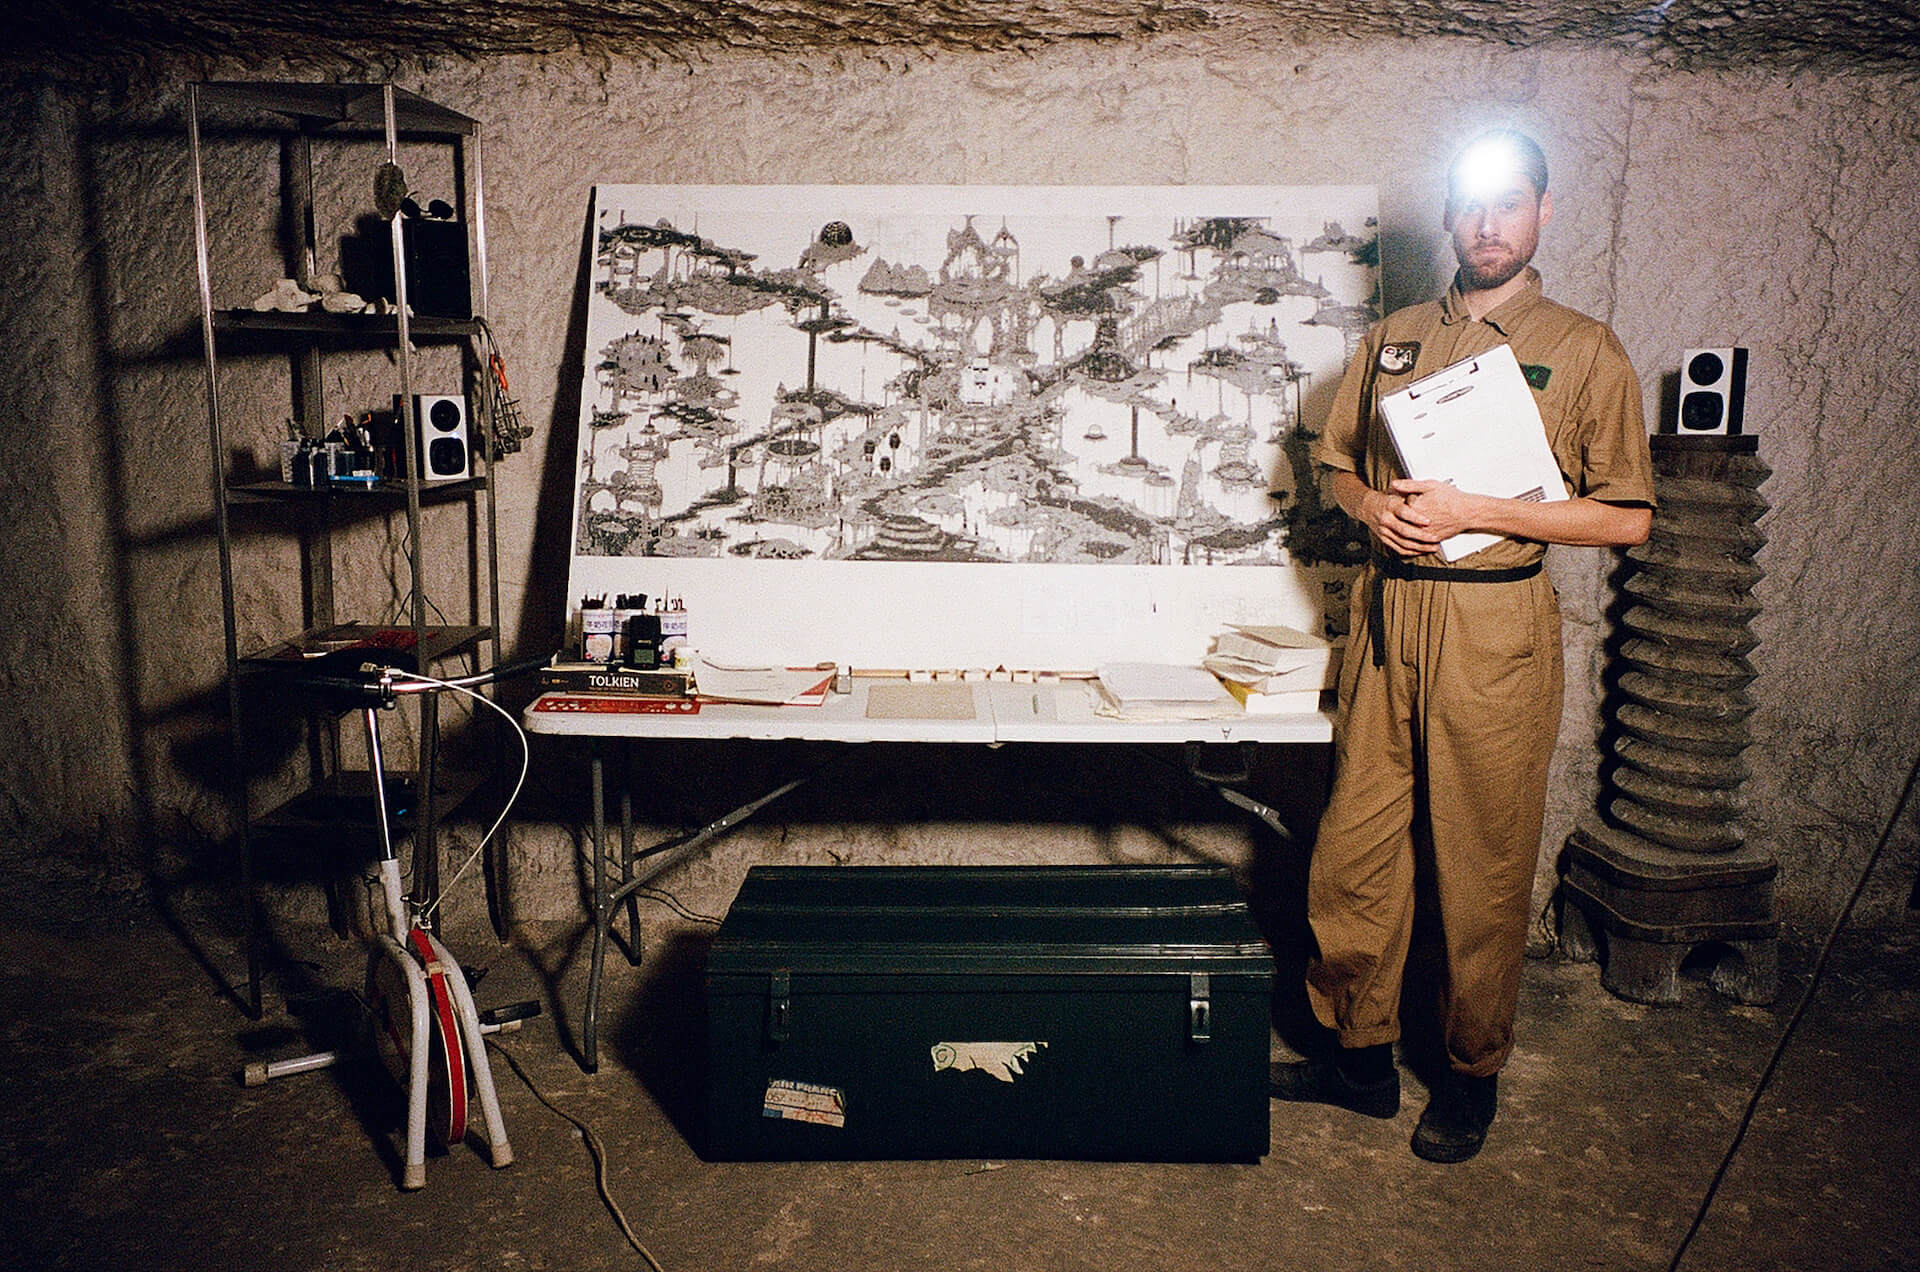 Jack Tezamの地下洞窟での隔離生活を覗き見る展示＜EXPÉRIENCE DISTORSION＞代官山・LAID BUGにて開催 artculture230208-jack-tezam5